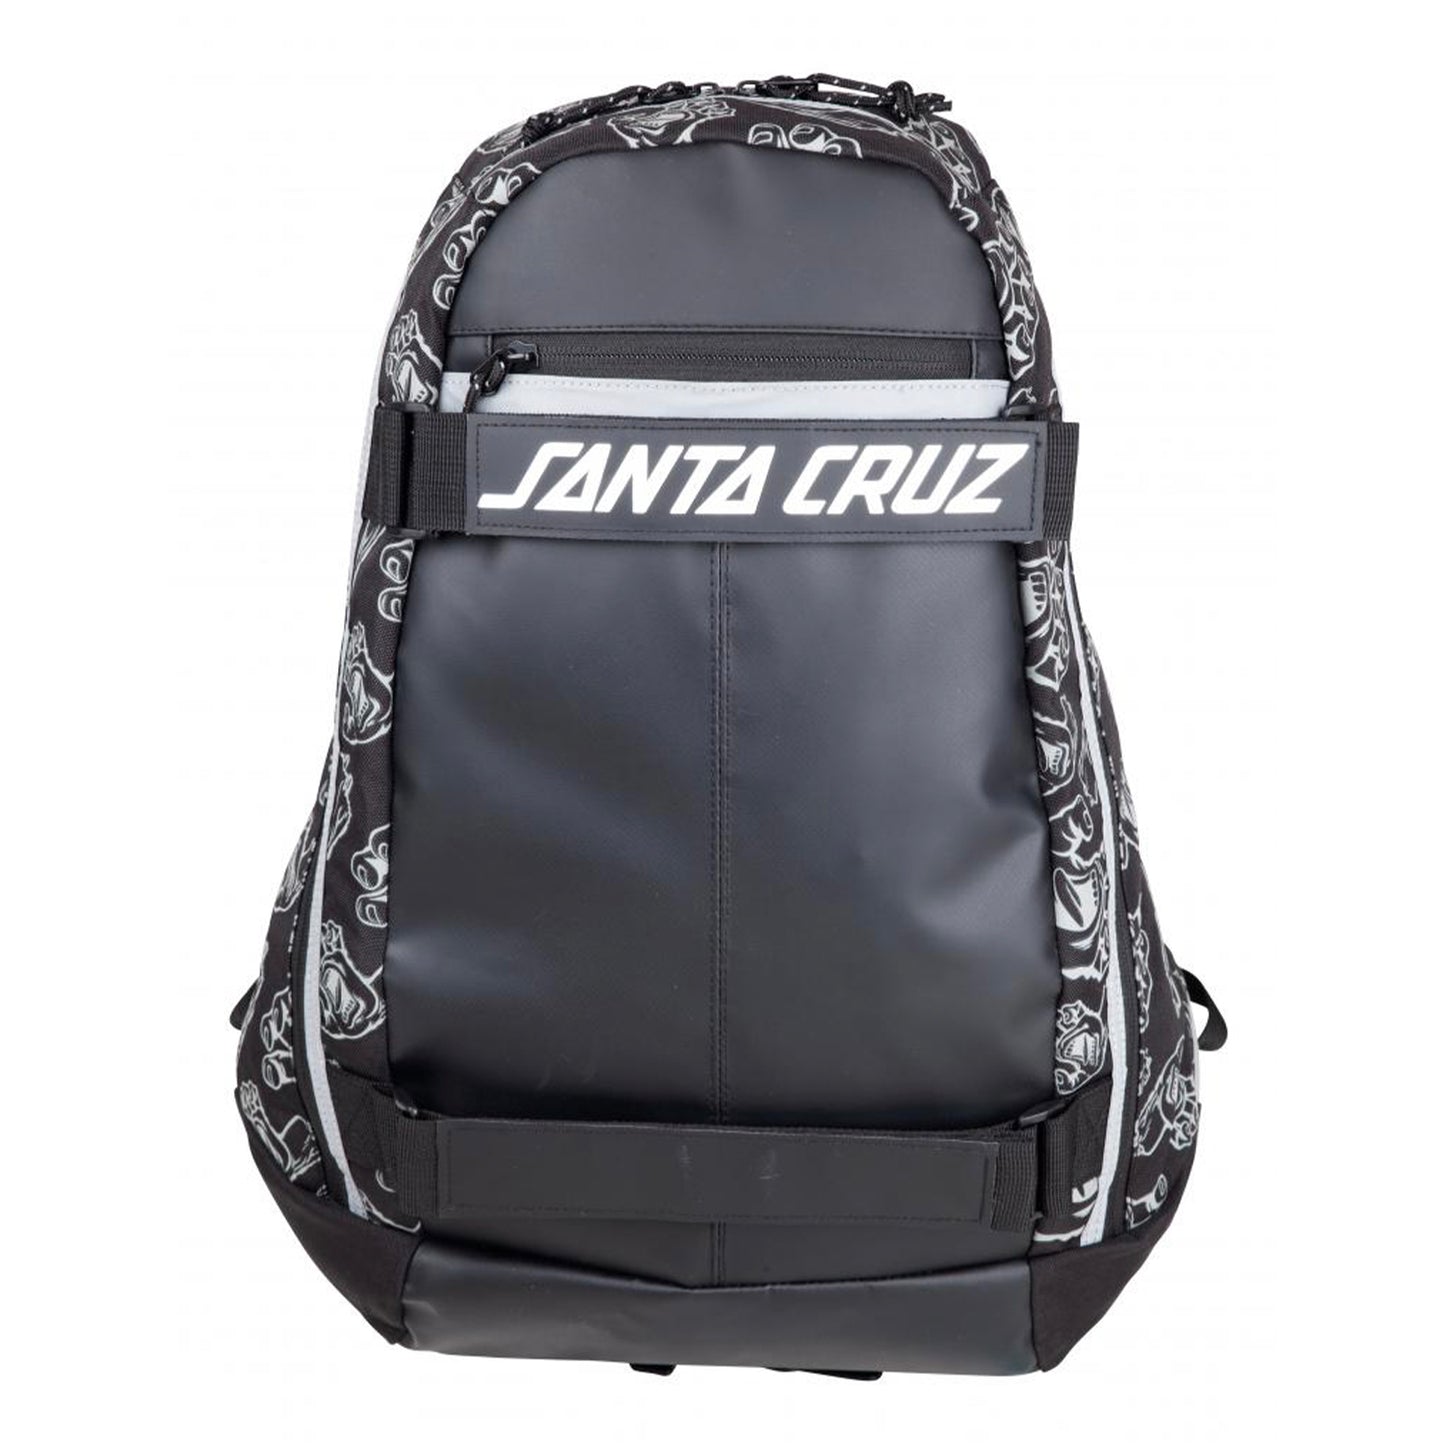 Santa Cruz Dispatch Skatepack Backpack - Black - Prime Delux Store